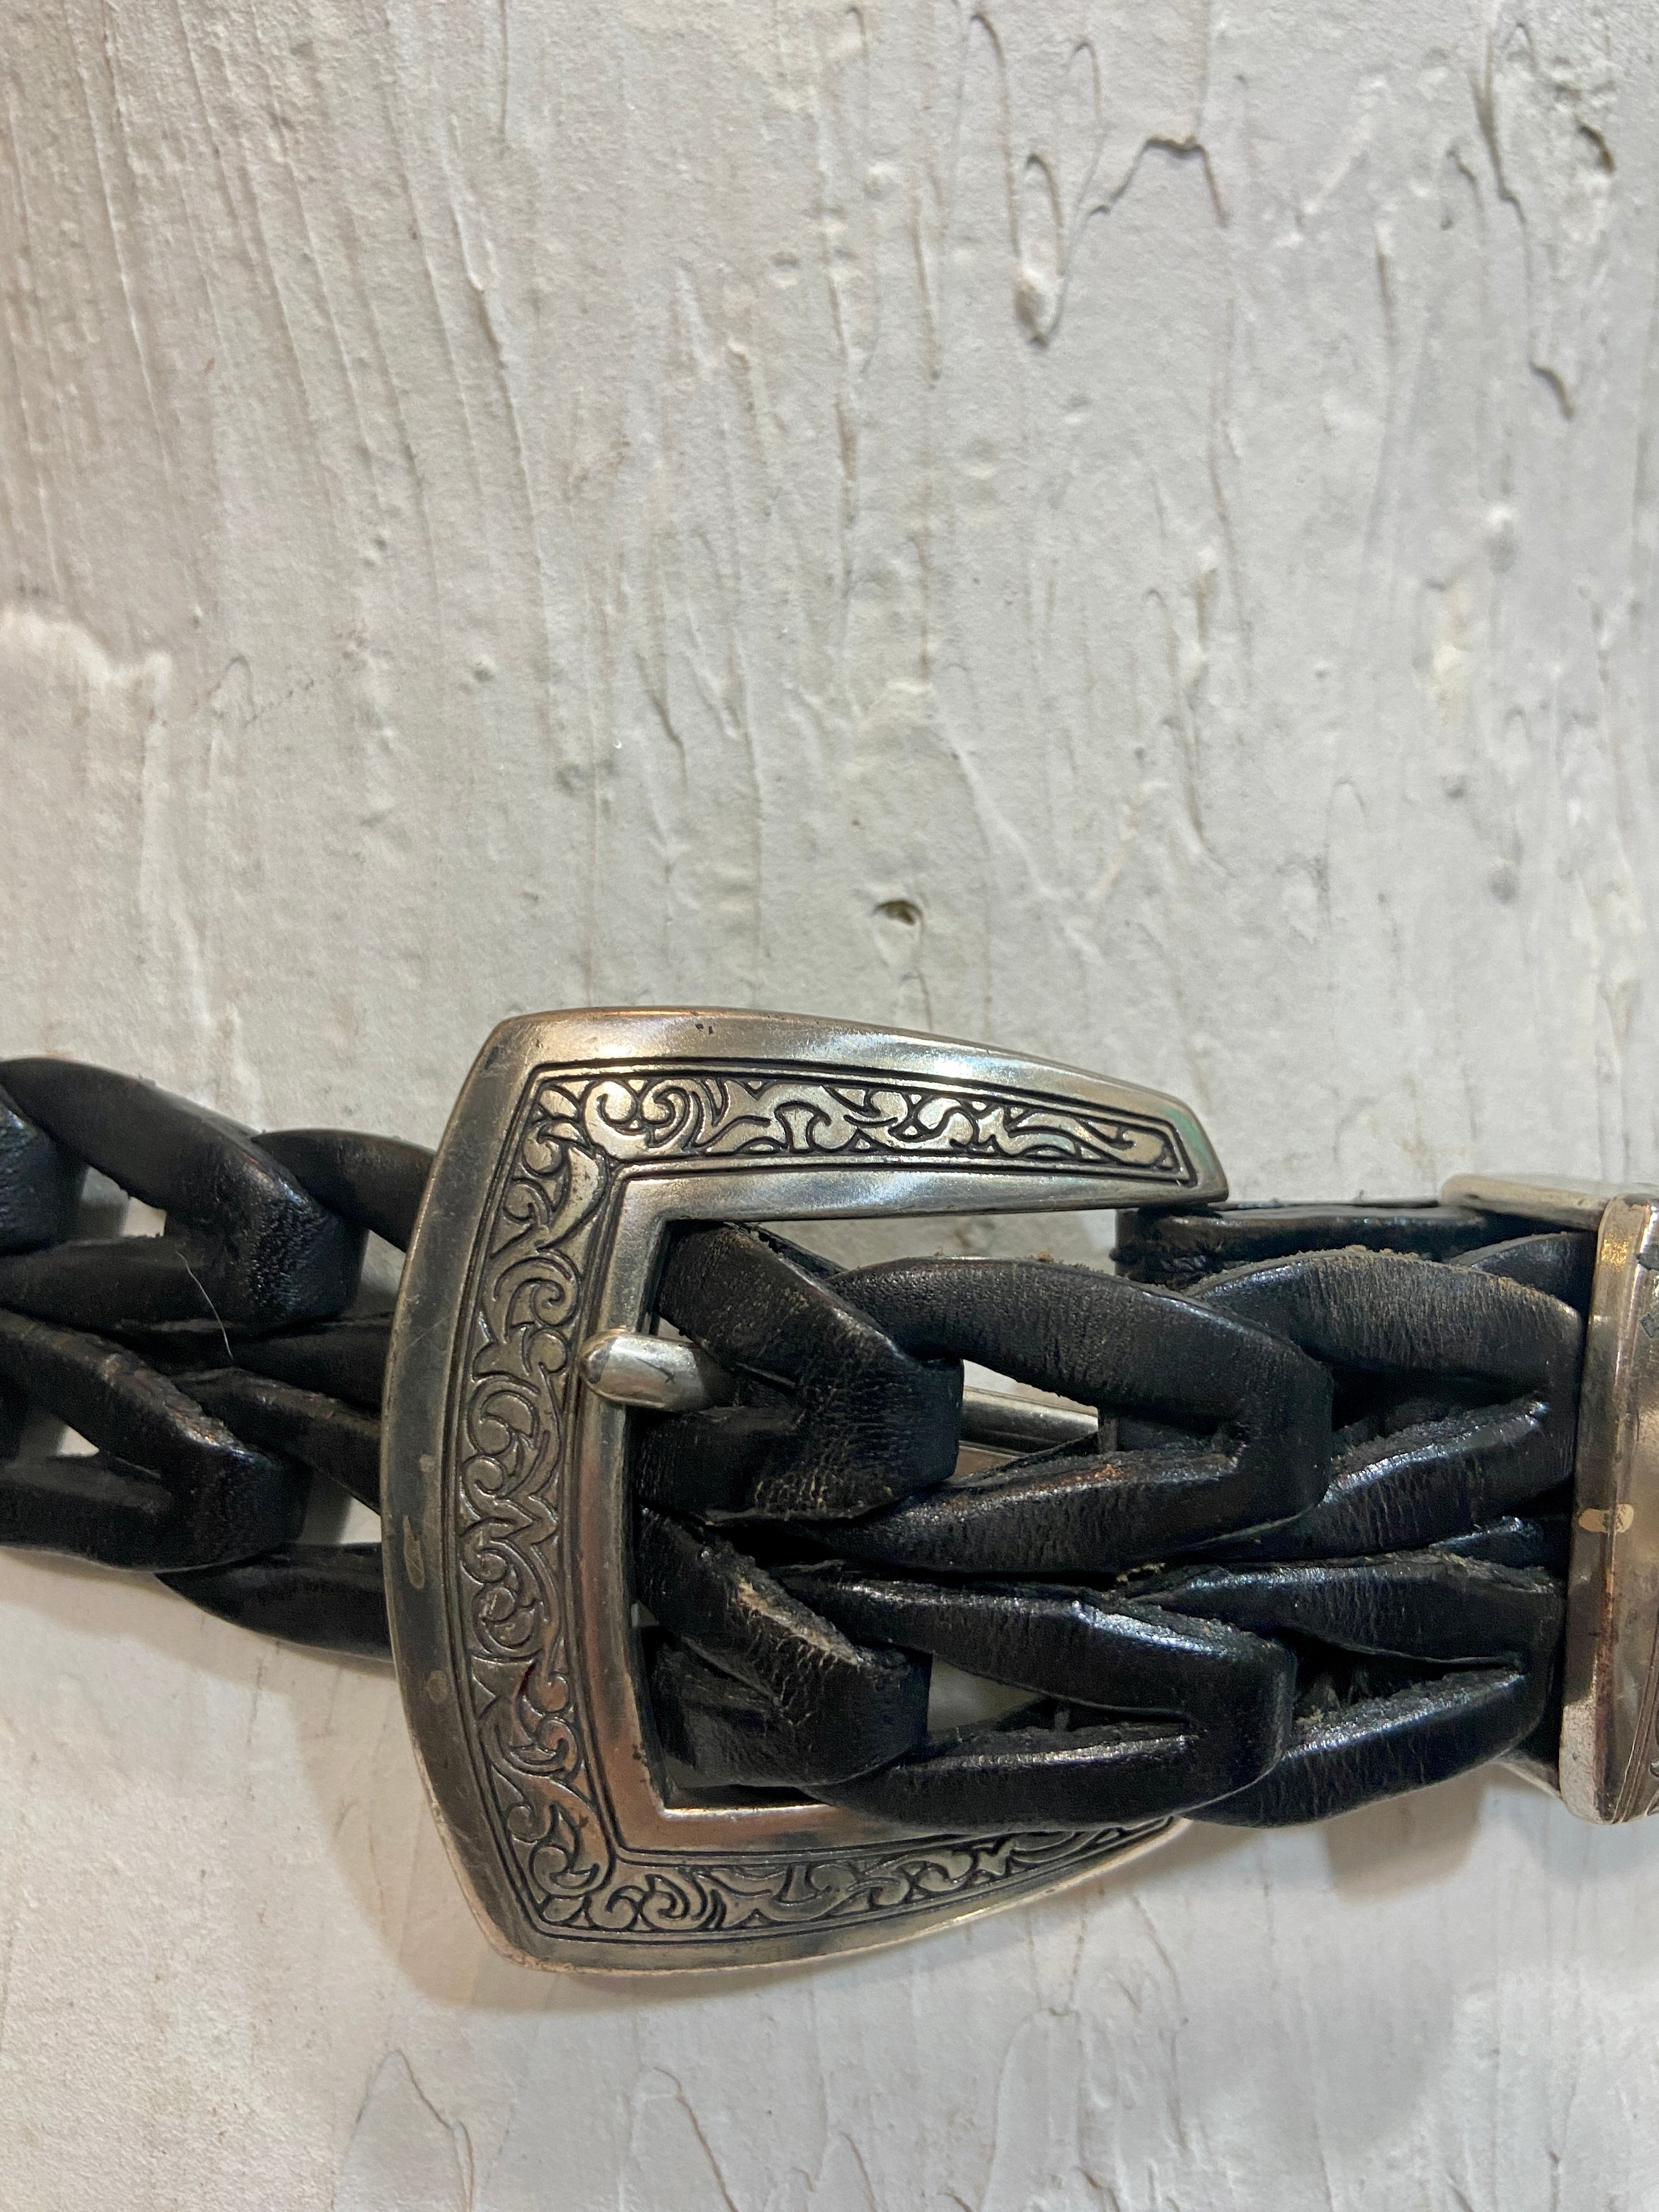 Western Braided black leather belt